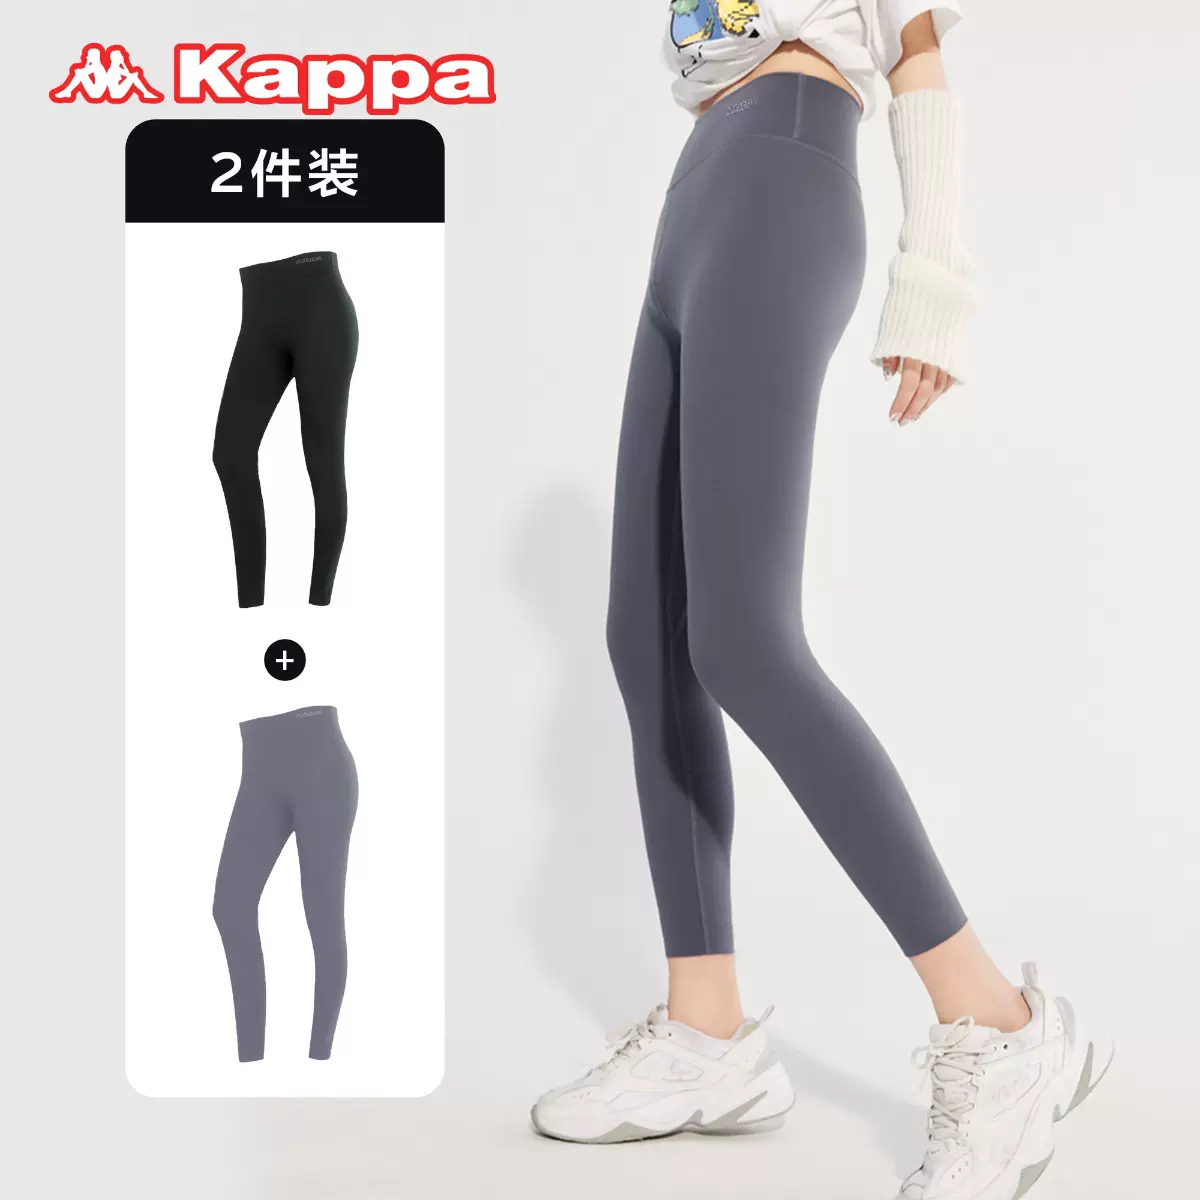 Kappa 卡帕 女式运动打底裤 鲨鱼裤 长裤*2条装 双重优惠折后￥99.9包邮